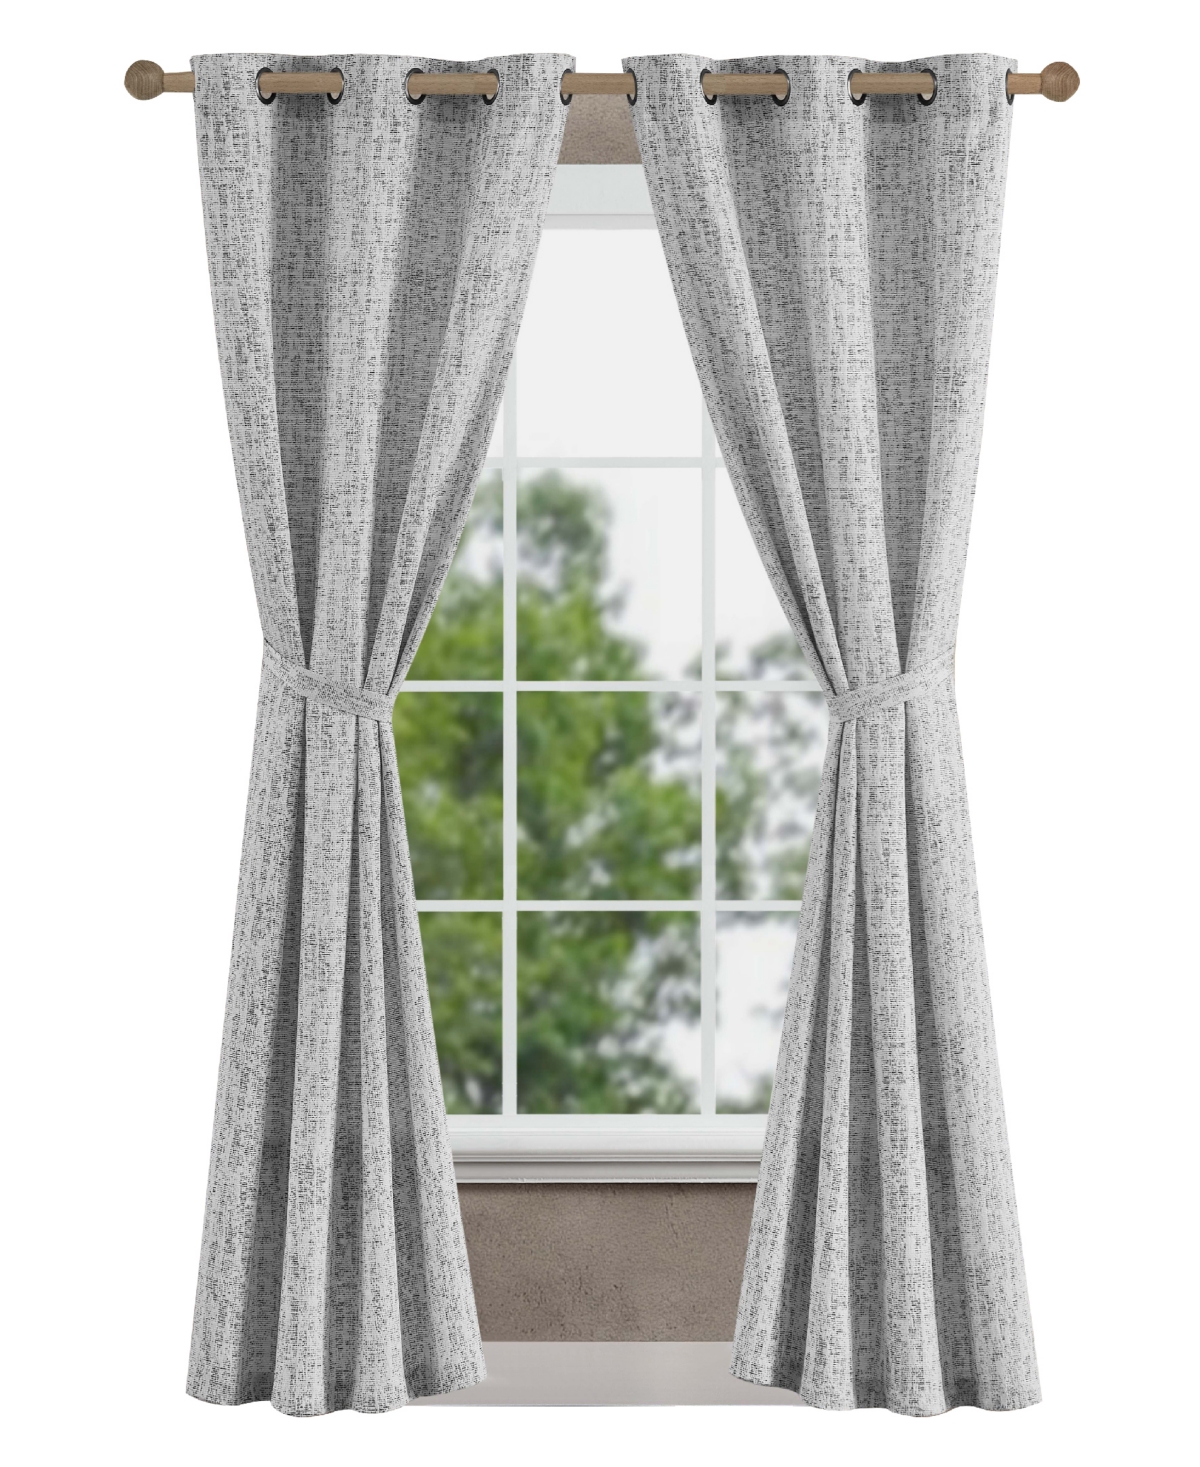 Jessica Simpson Tallulah Textured Blackout Grommet Window Curtain Panel Pair With Tiebacks, 38" X 84" In Gray